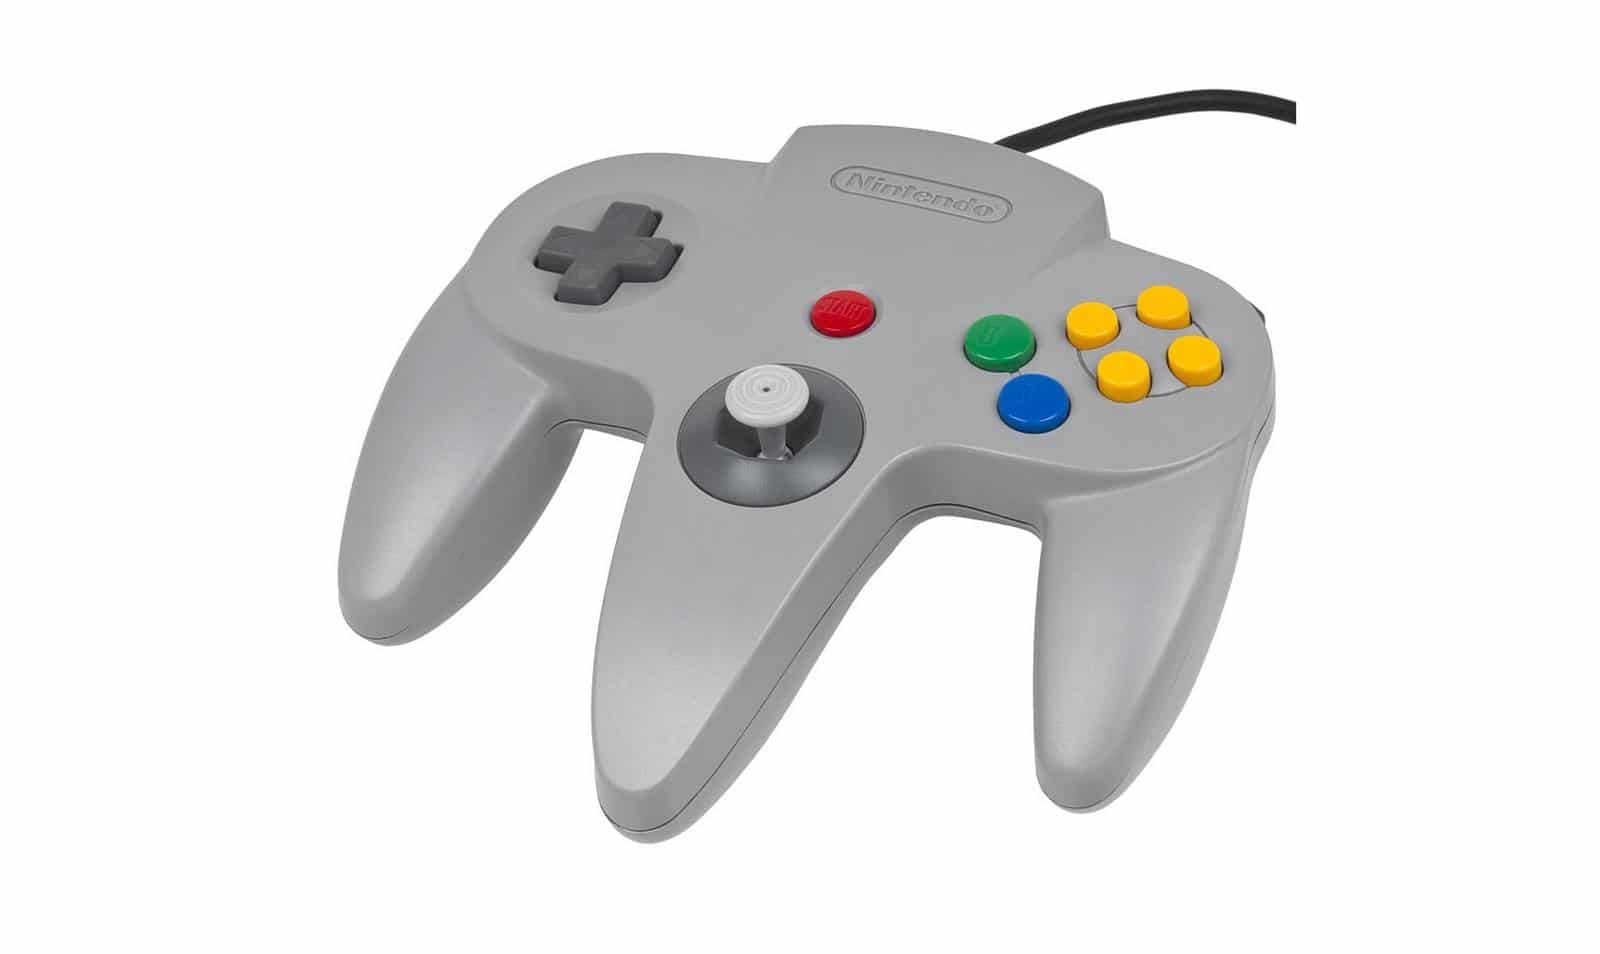 Classic Switch controller.  Nintendo can prepare a replica of the N64